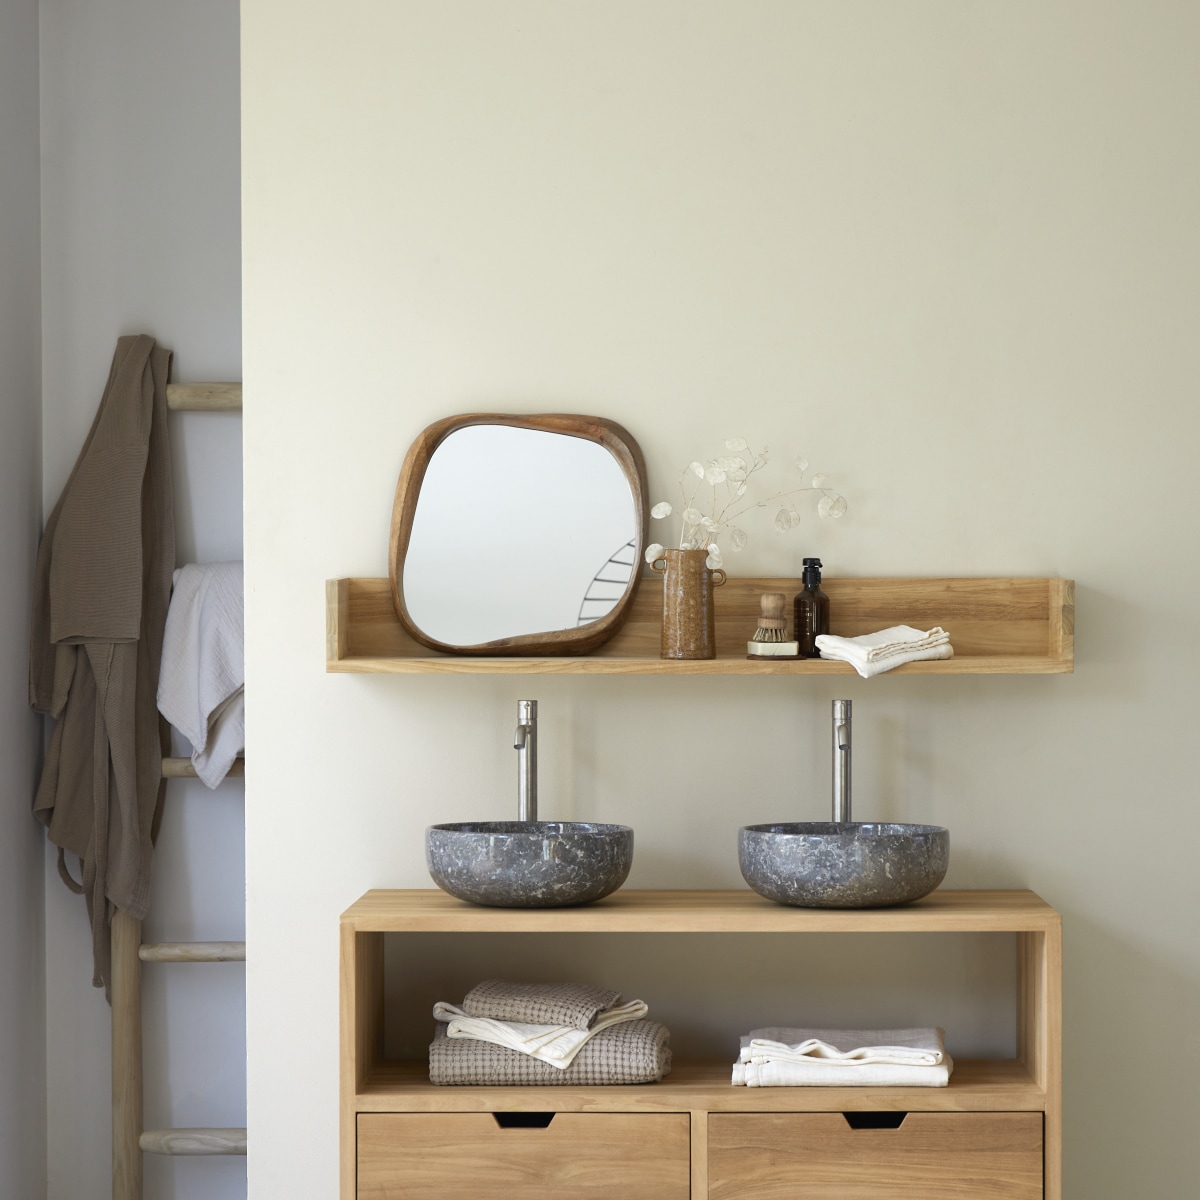 Arty - Solid teak bathroom Shelf